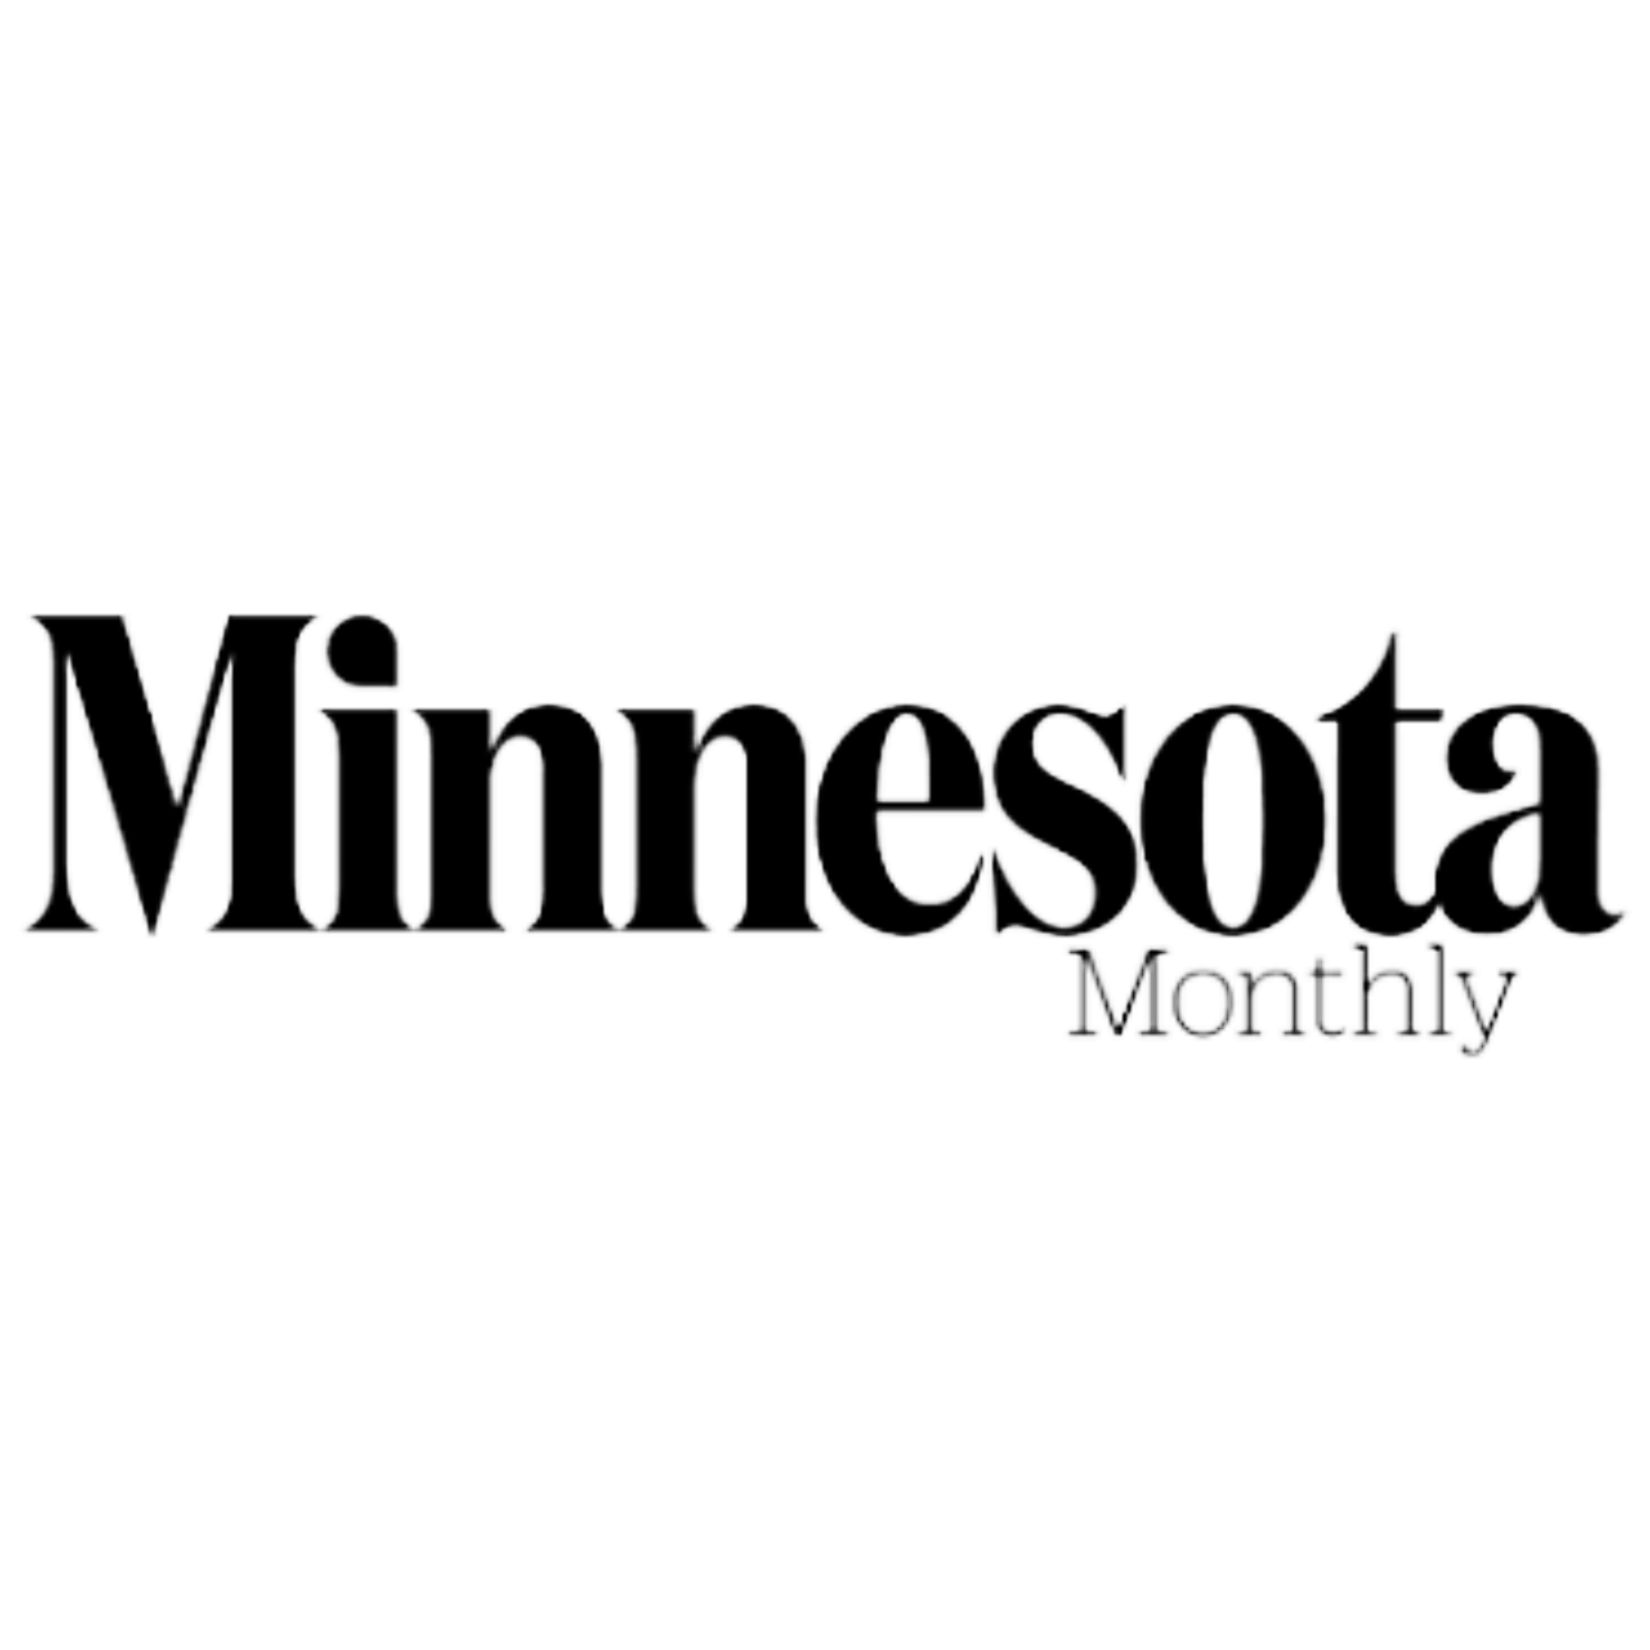 Copy of Minnesota Monthly logo